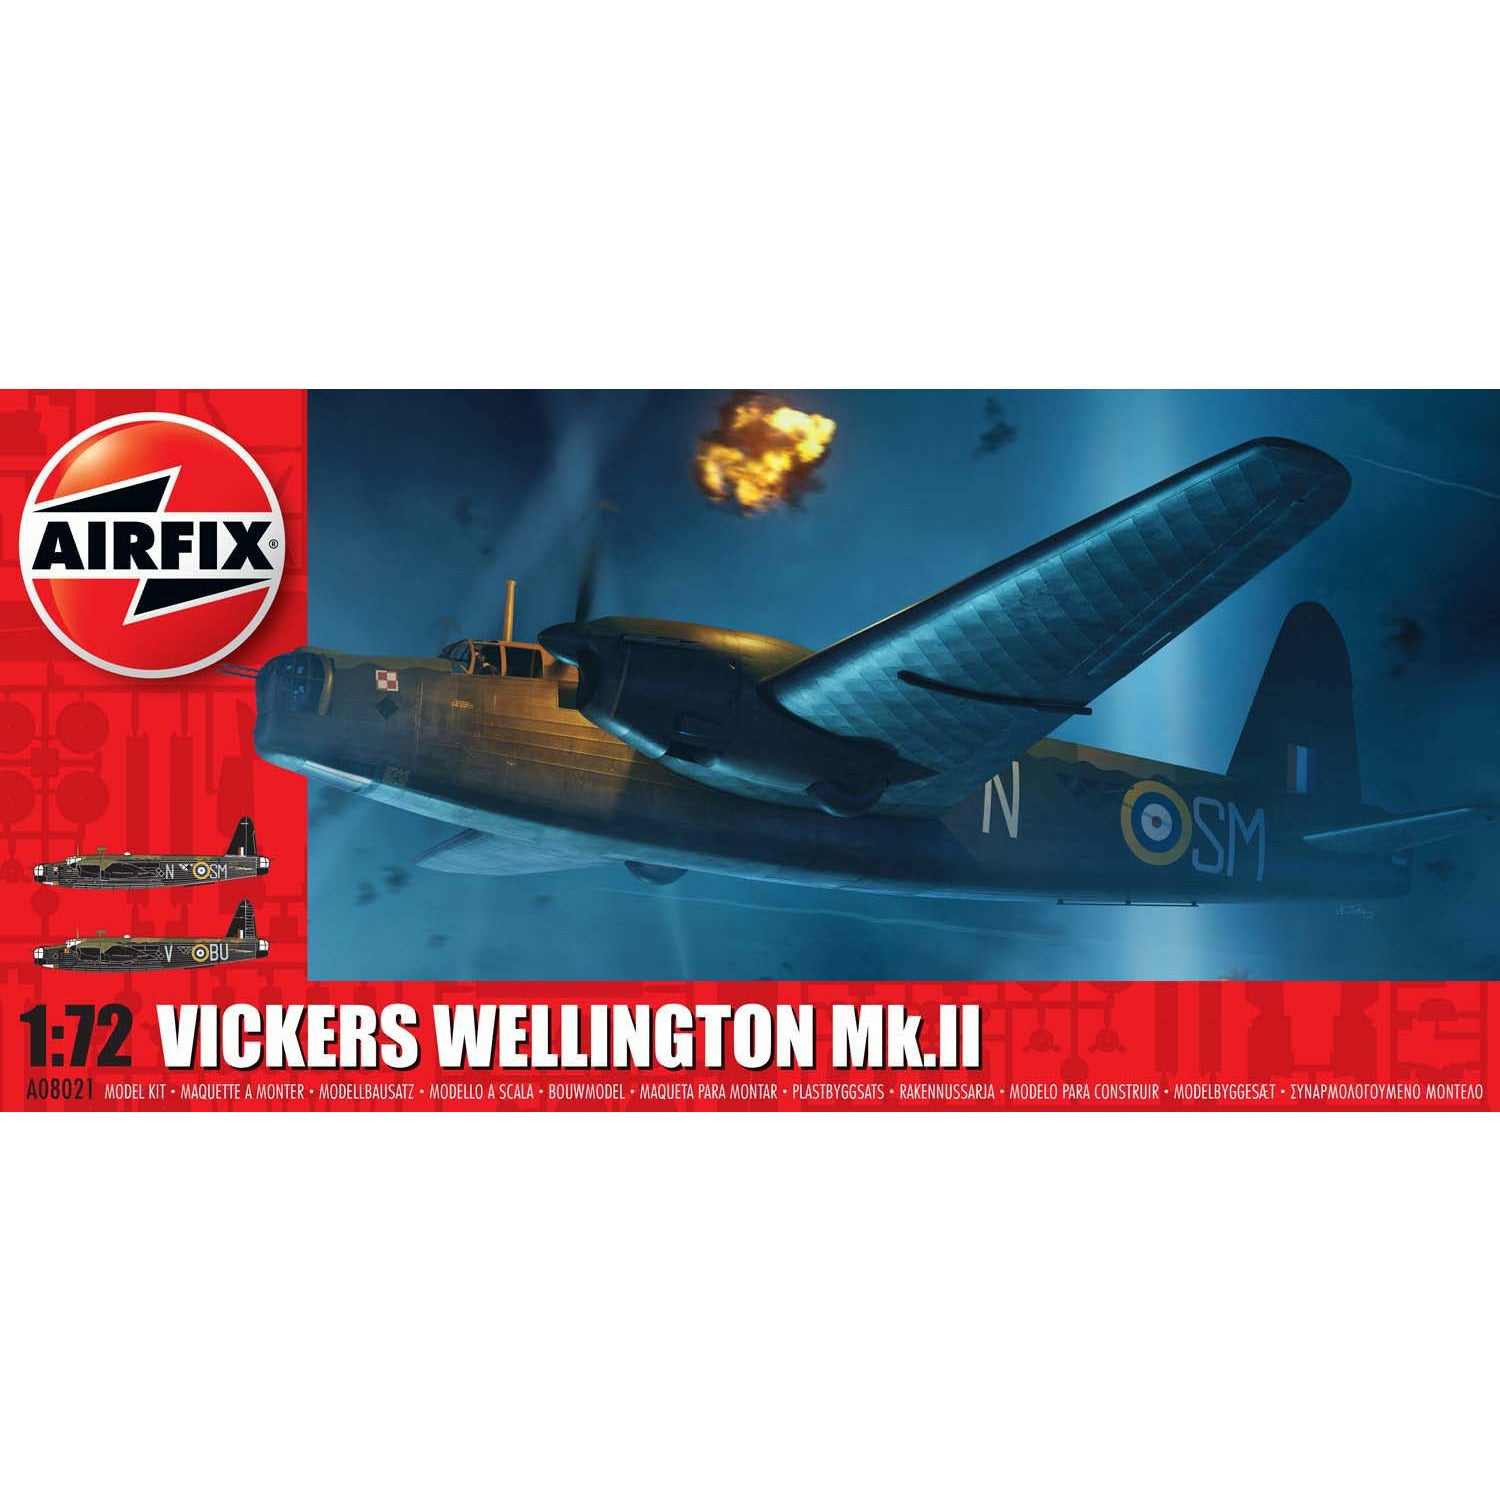 Vickers Wellington MK.II 1/72 #08021 by Airfix